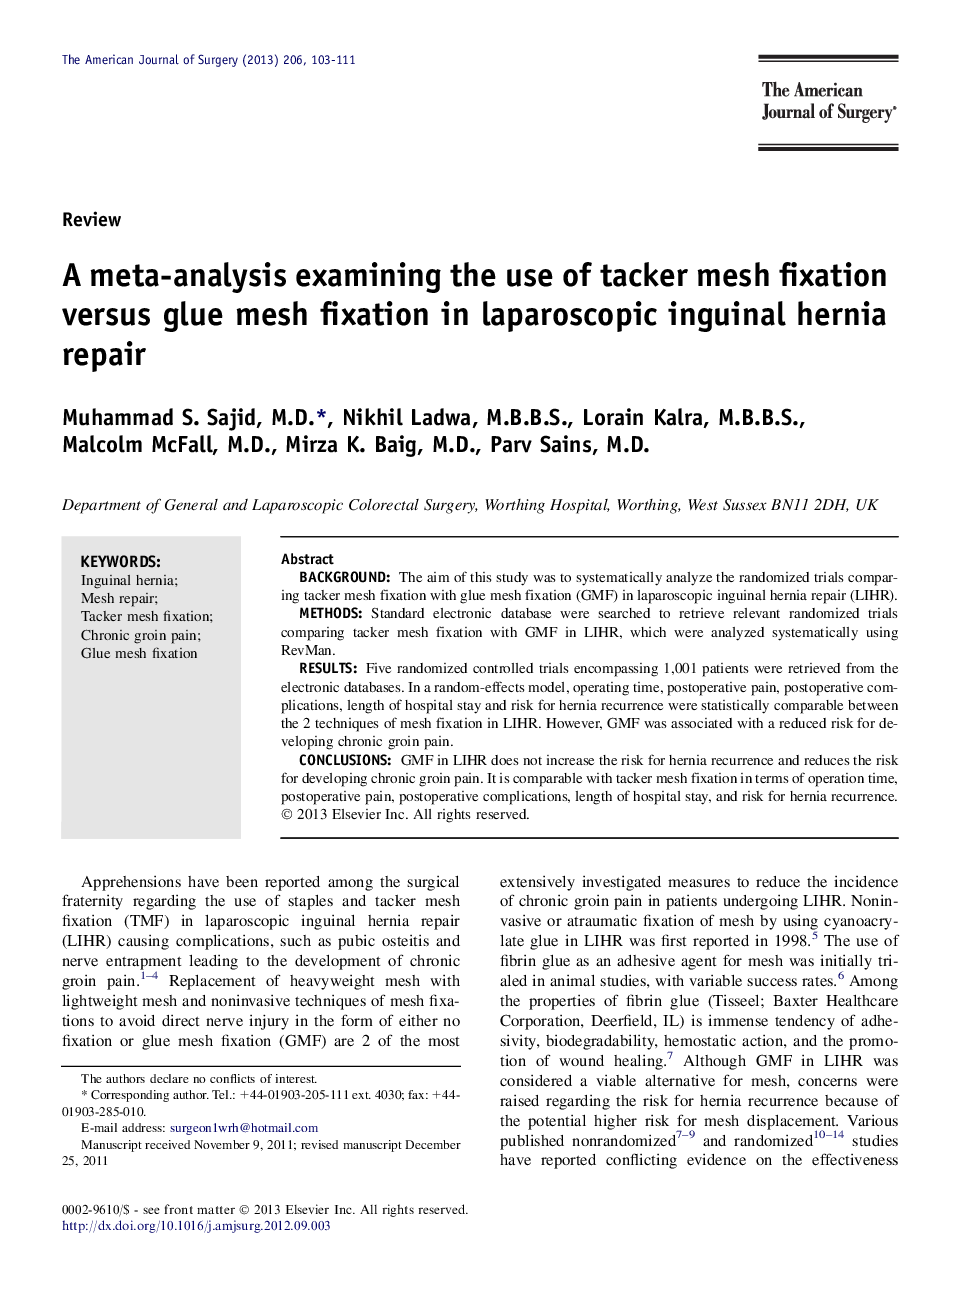 A meta-analysis examining the use of tacker mesh fixation versus glue mesh fixation in laparoscopic inguinal hernia repair 